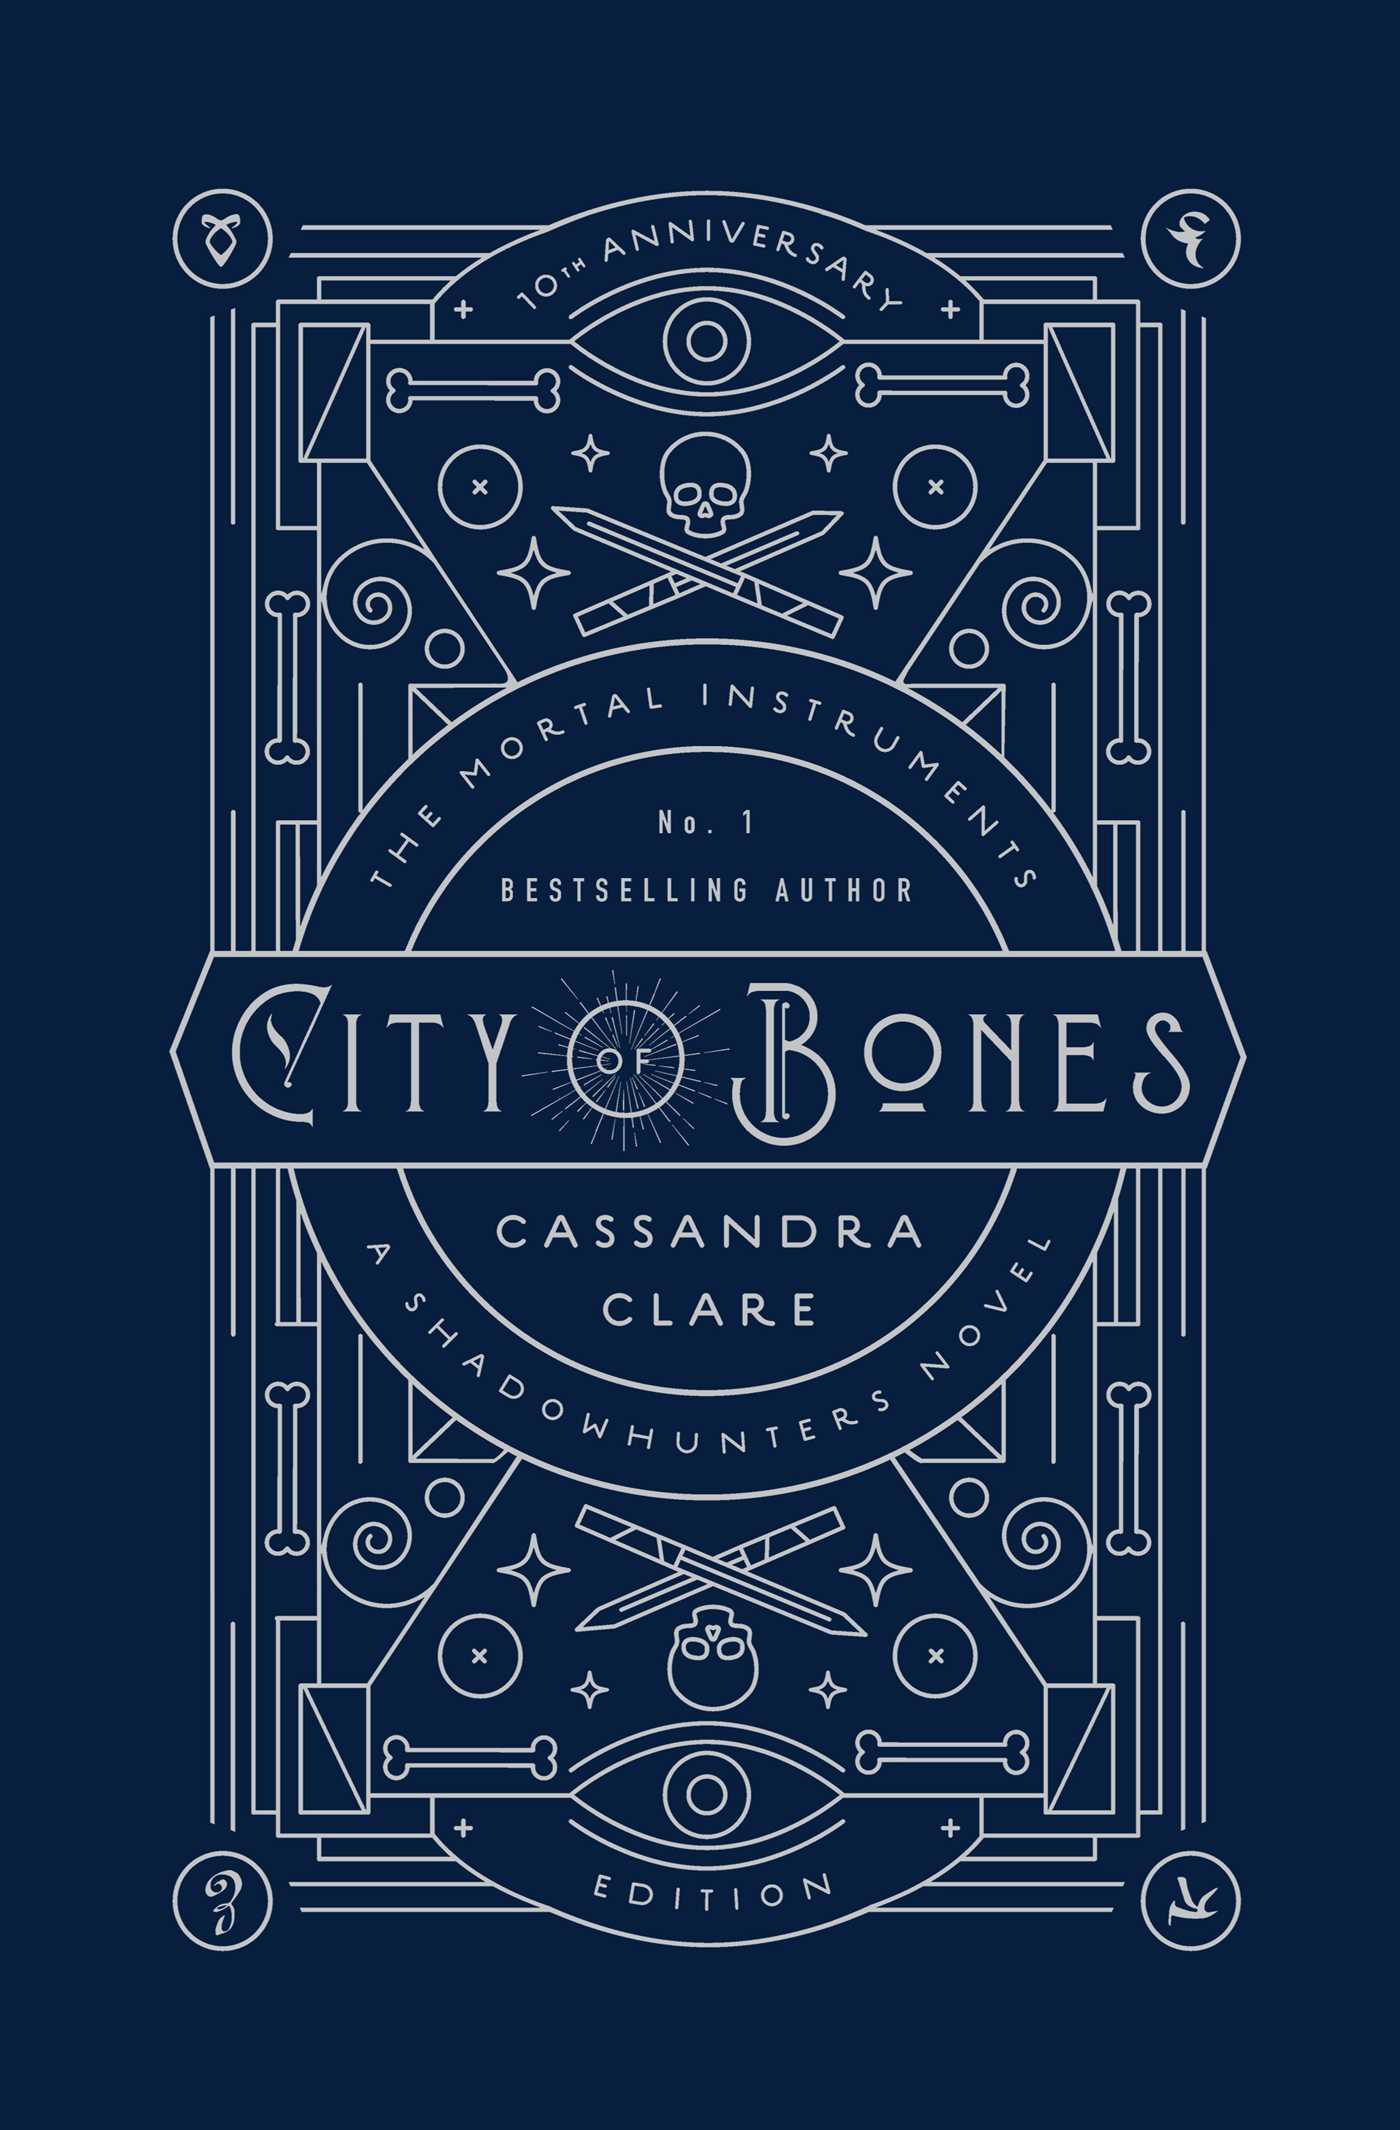 City of bones 10th anniversary edition